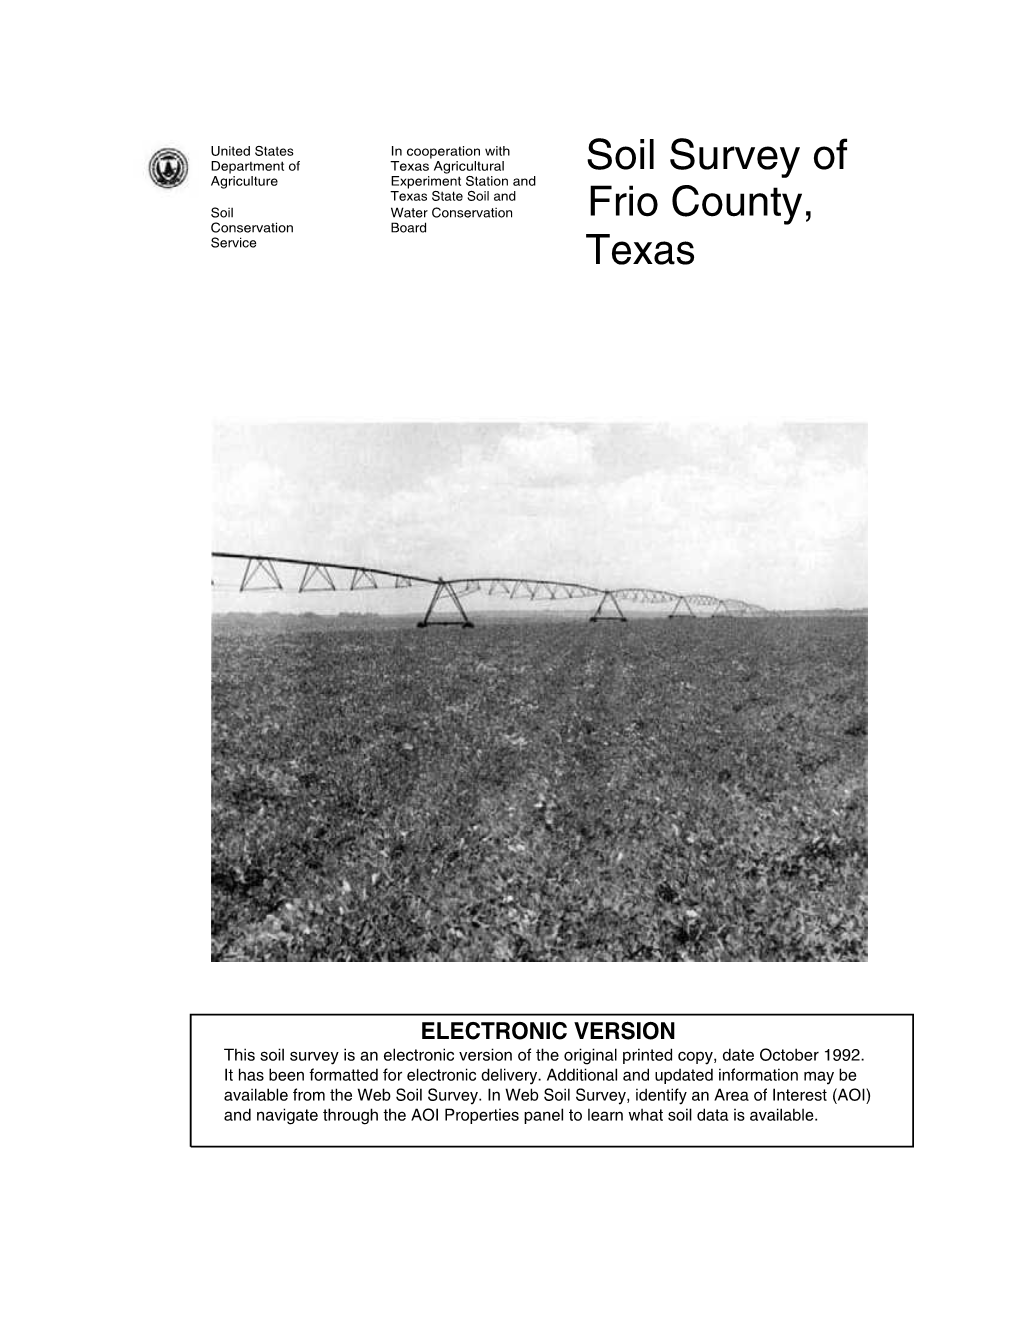 Soil Survey of Frio County, Texas I